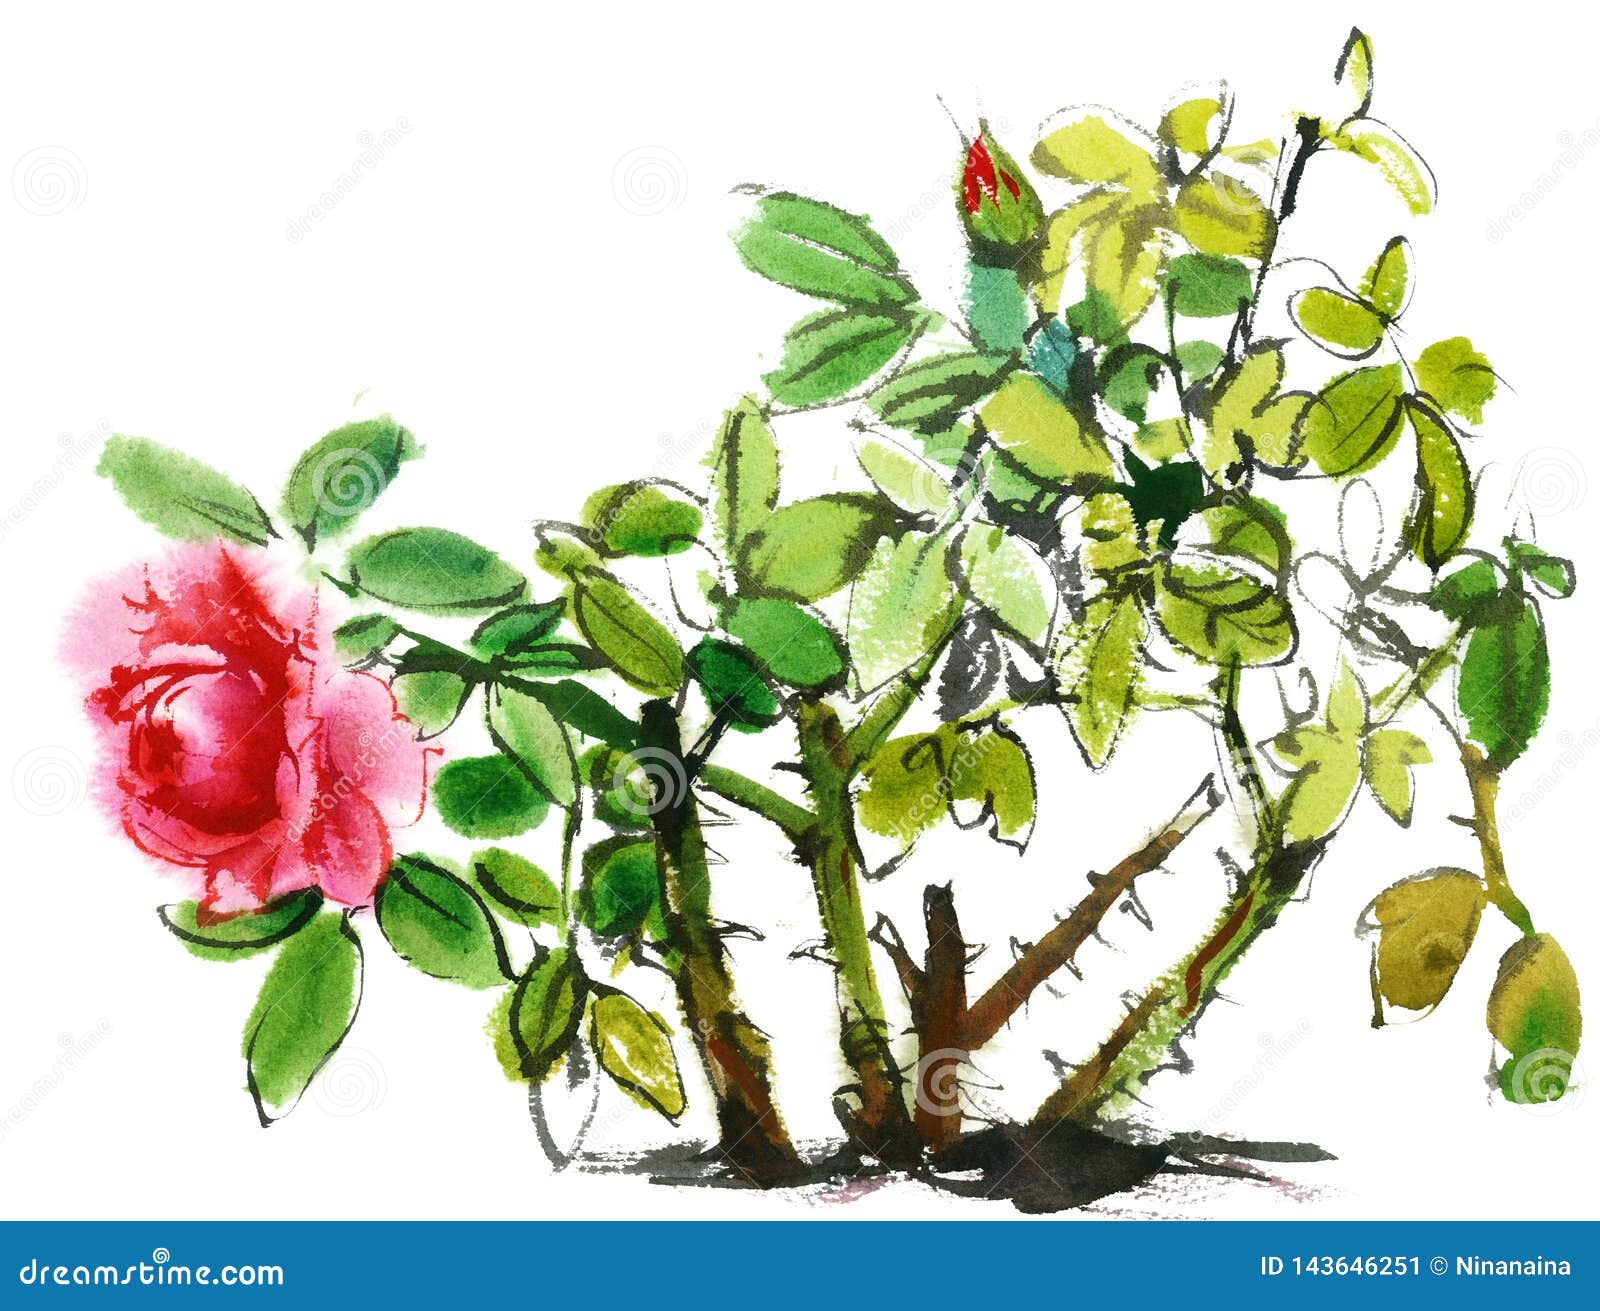 Rose Bush Drawing | Graphic Design | Bush drawing, Roses drawing, Rose bush